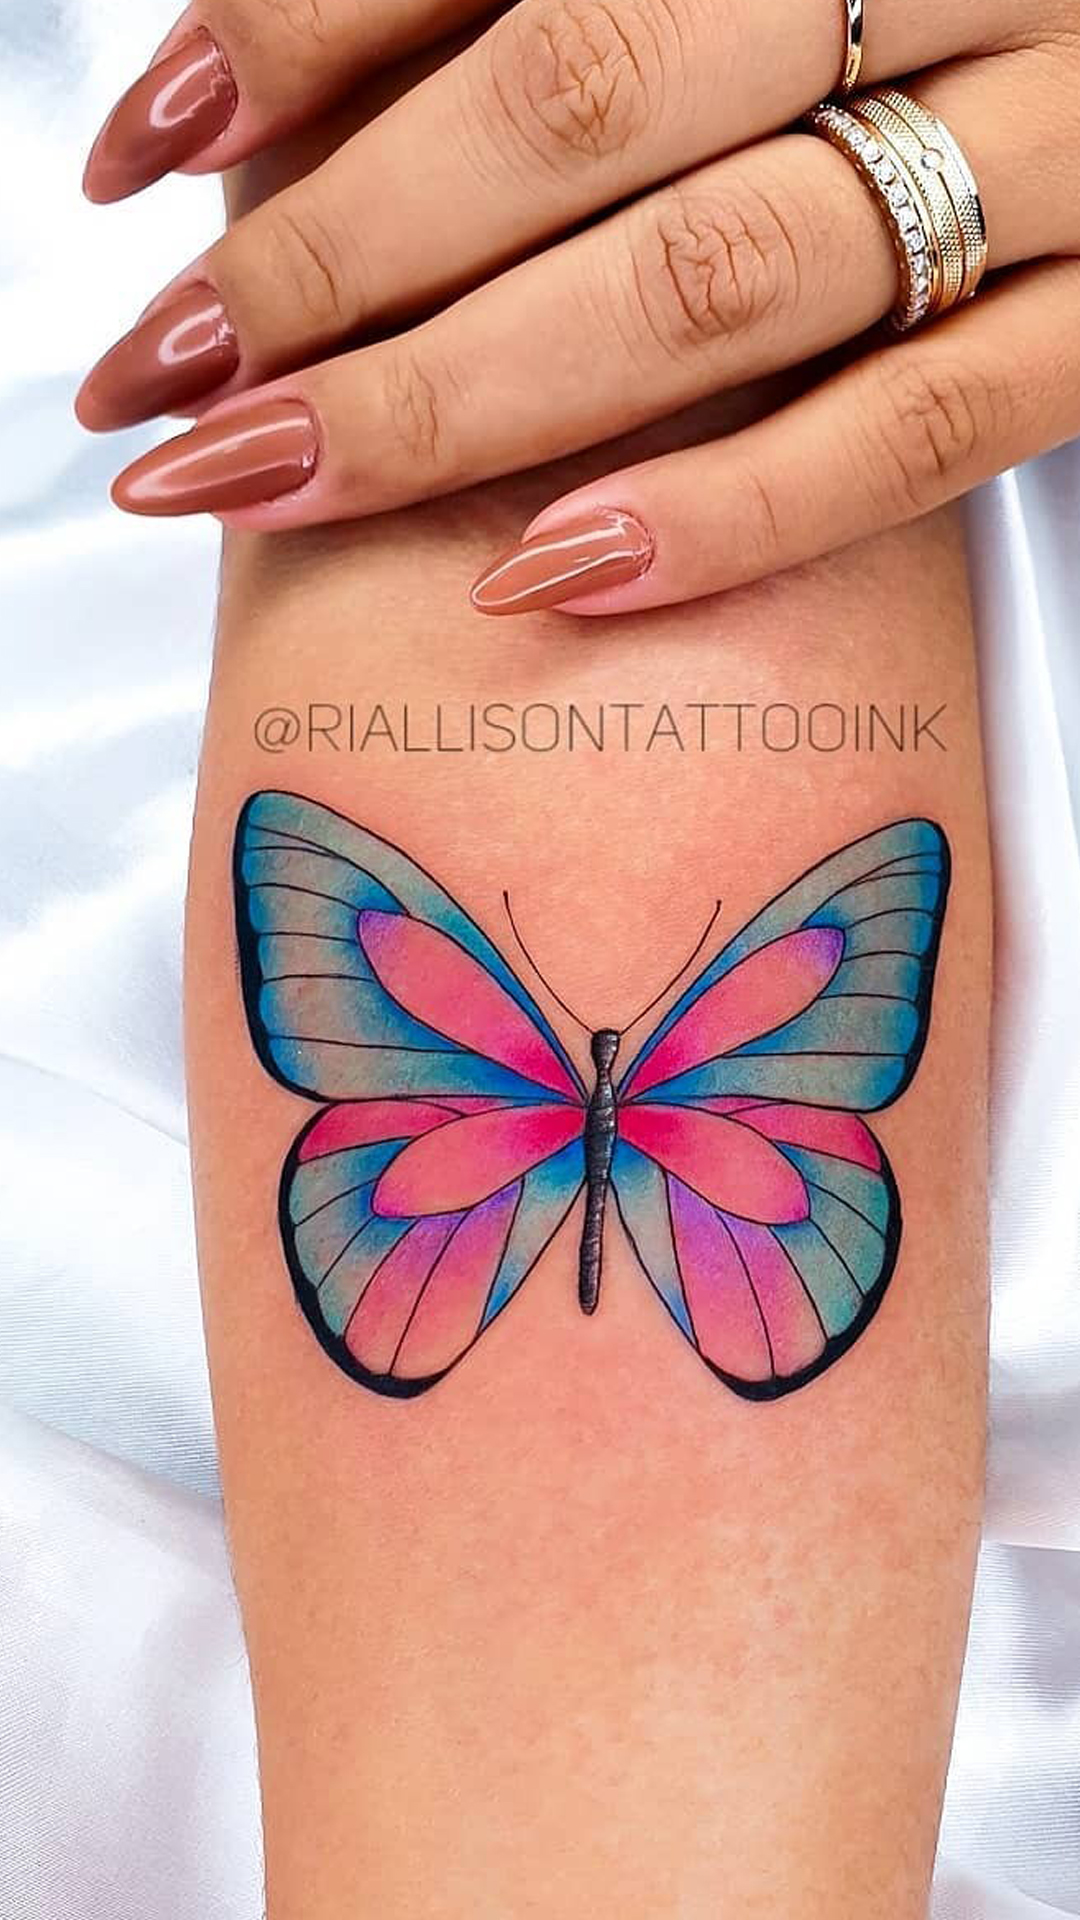 tatuagem-de-borboleta-no-braco-9 